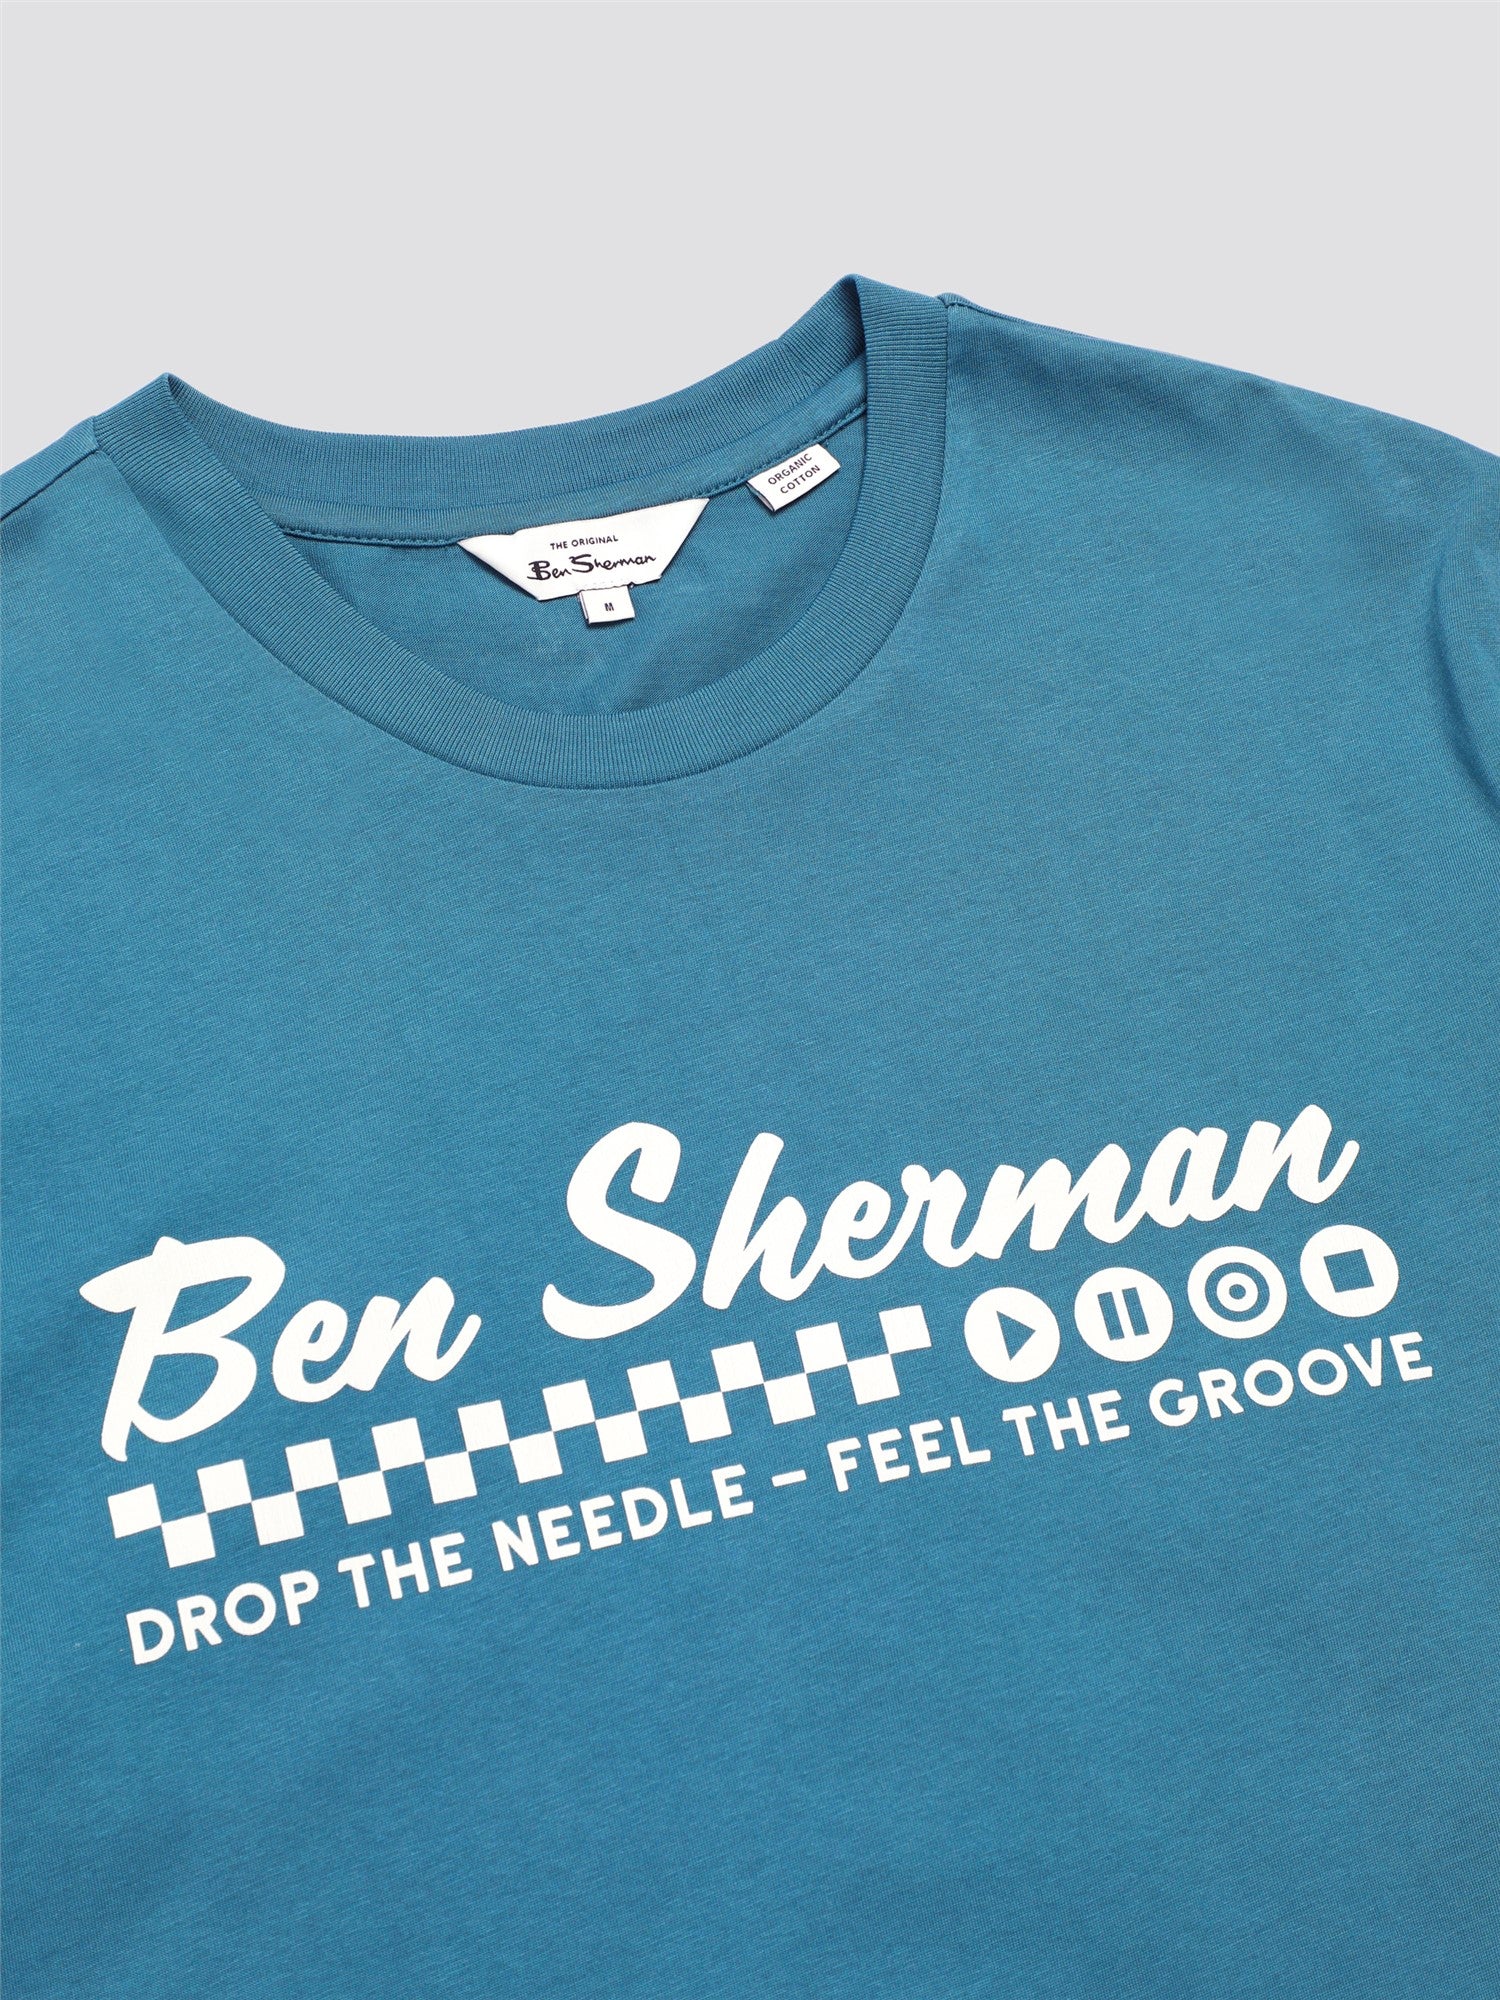 Ben Sherman Camiseta Feel The Grove Teal